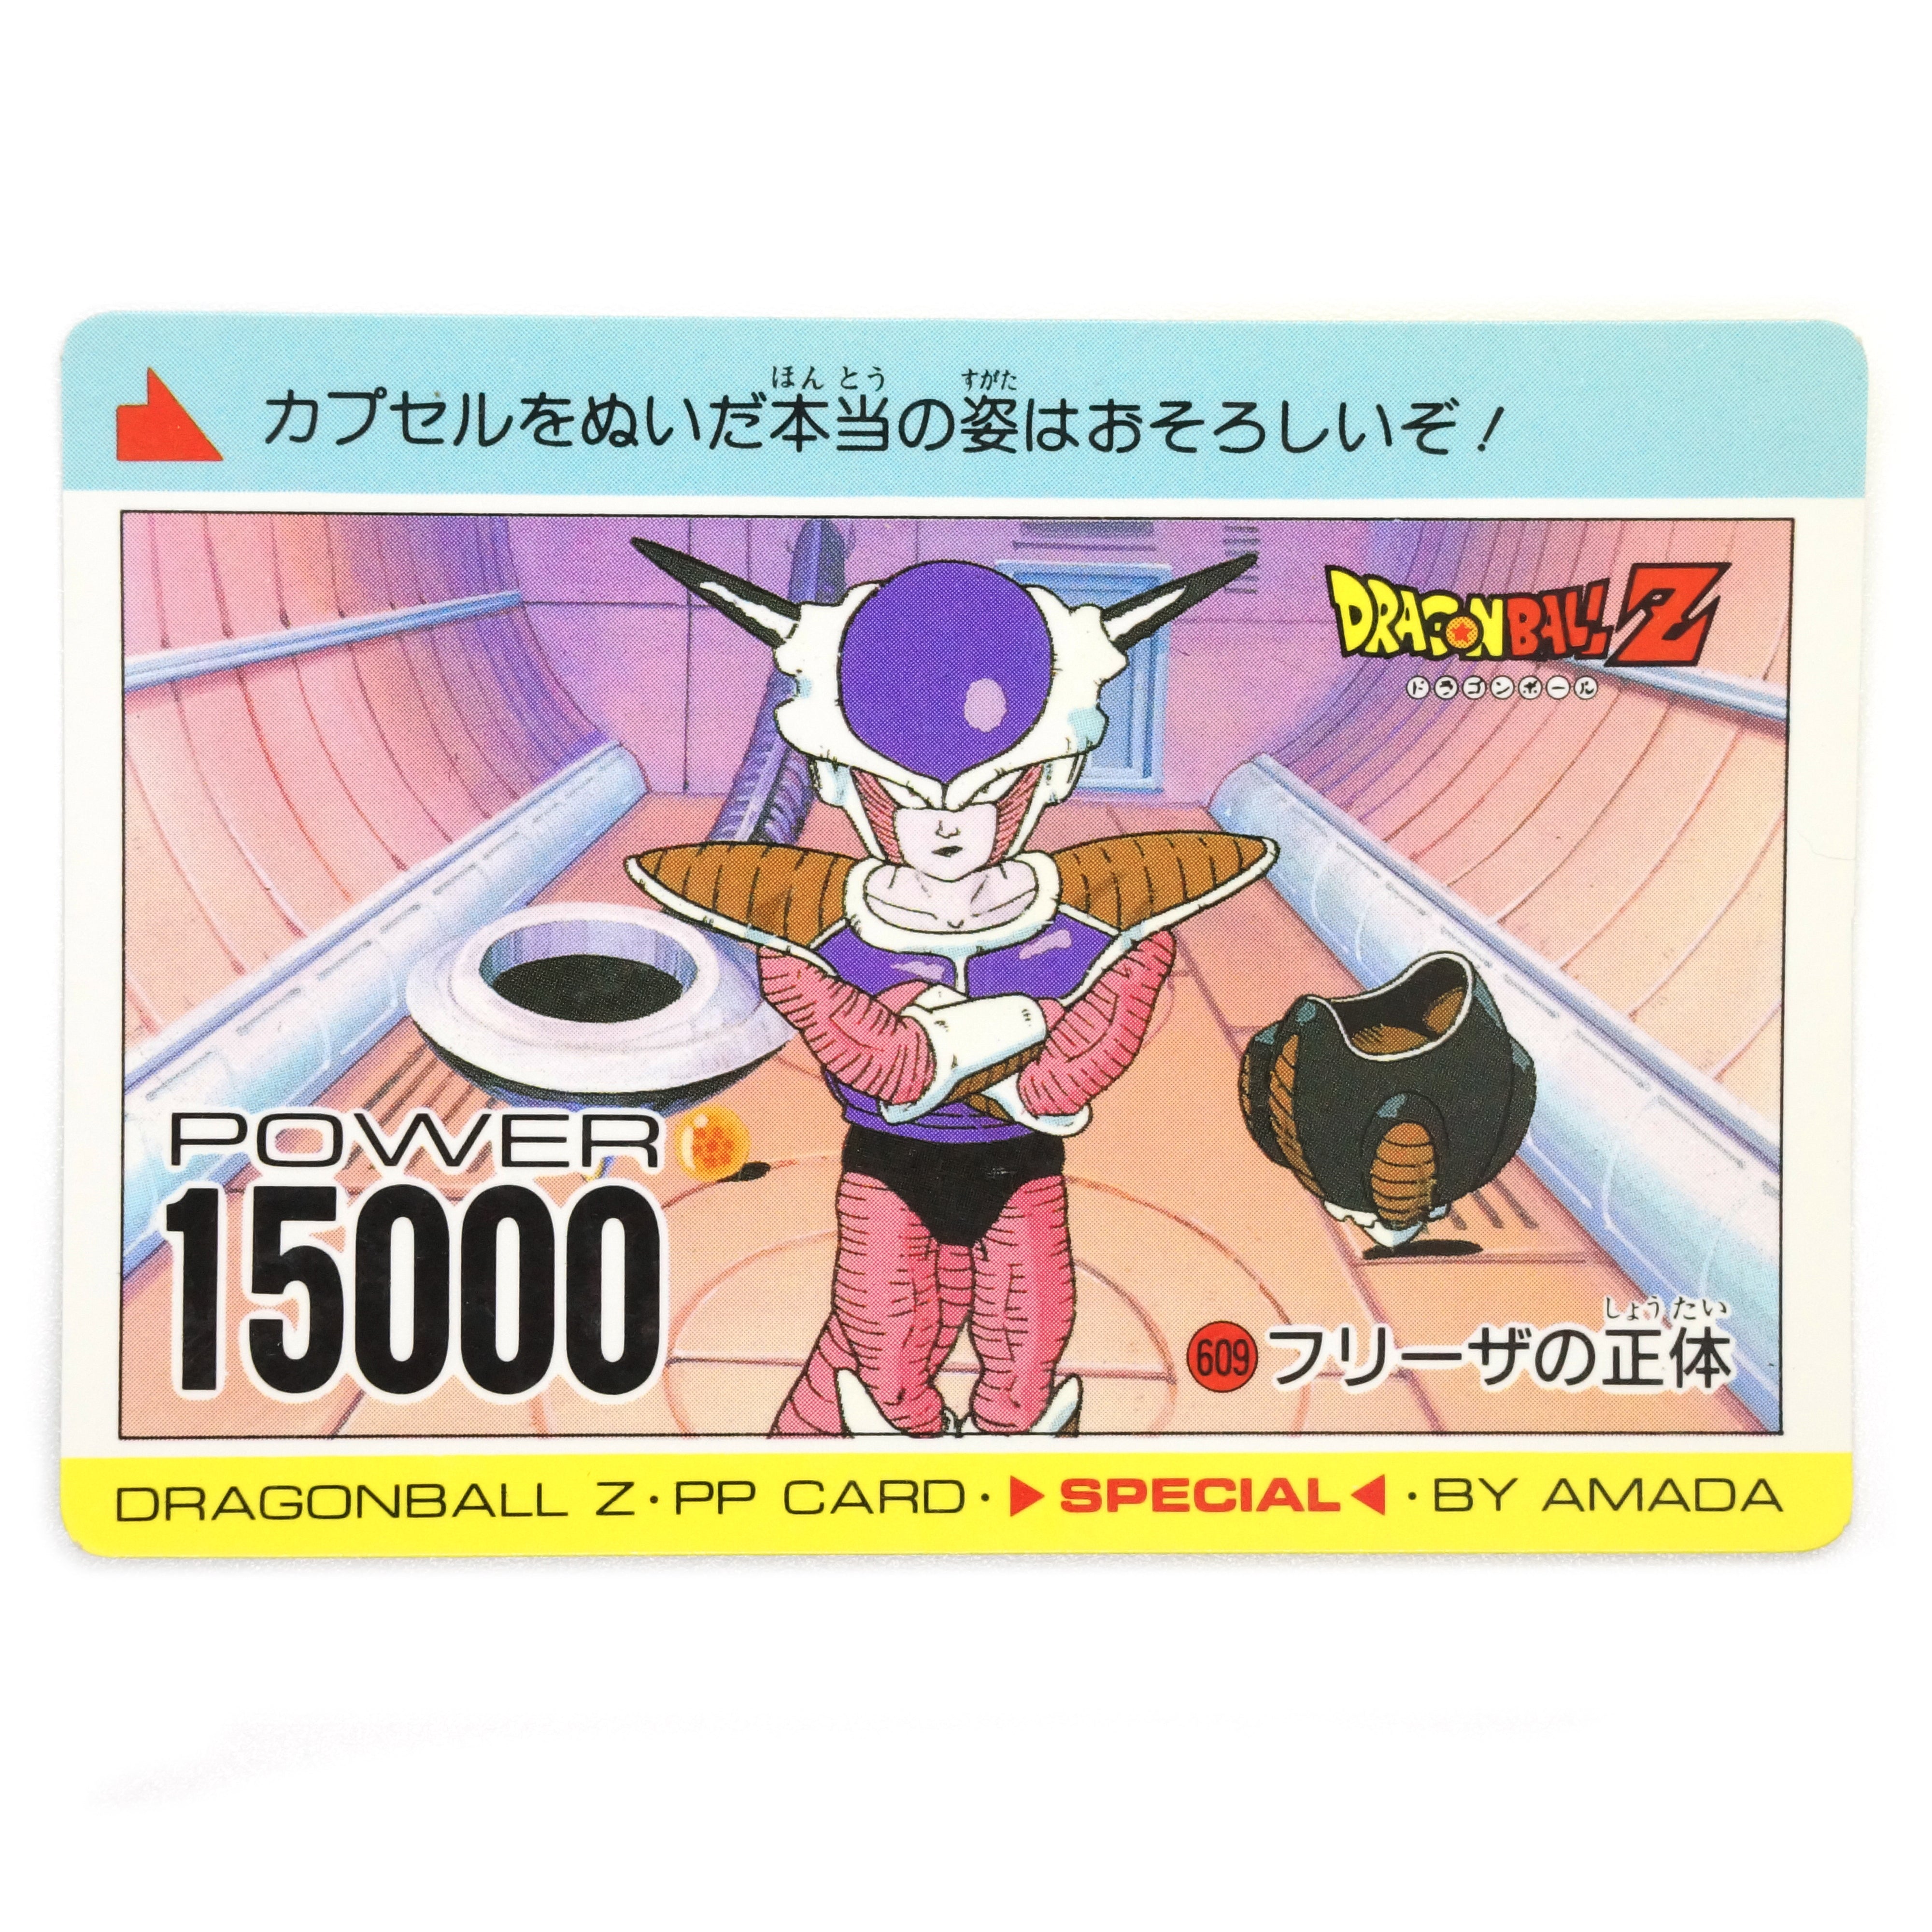 PP Card 609